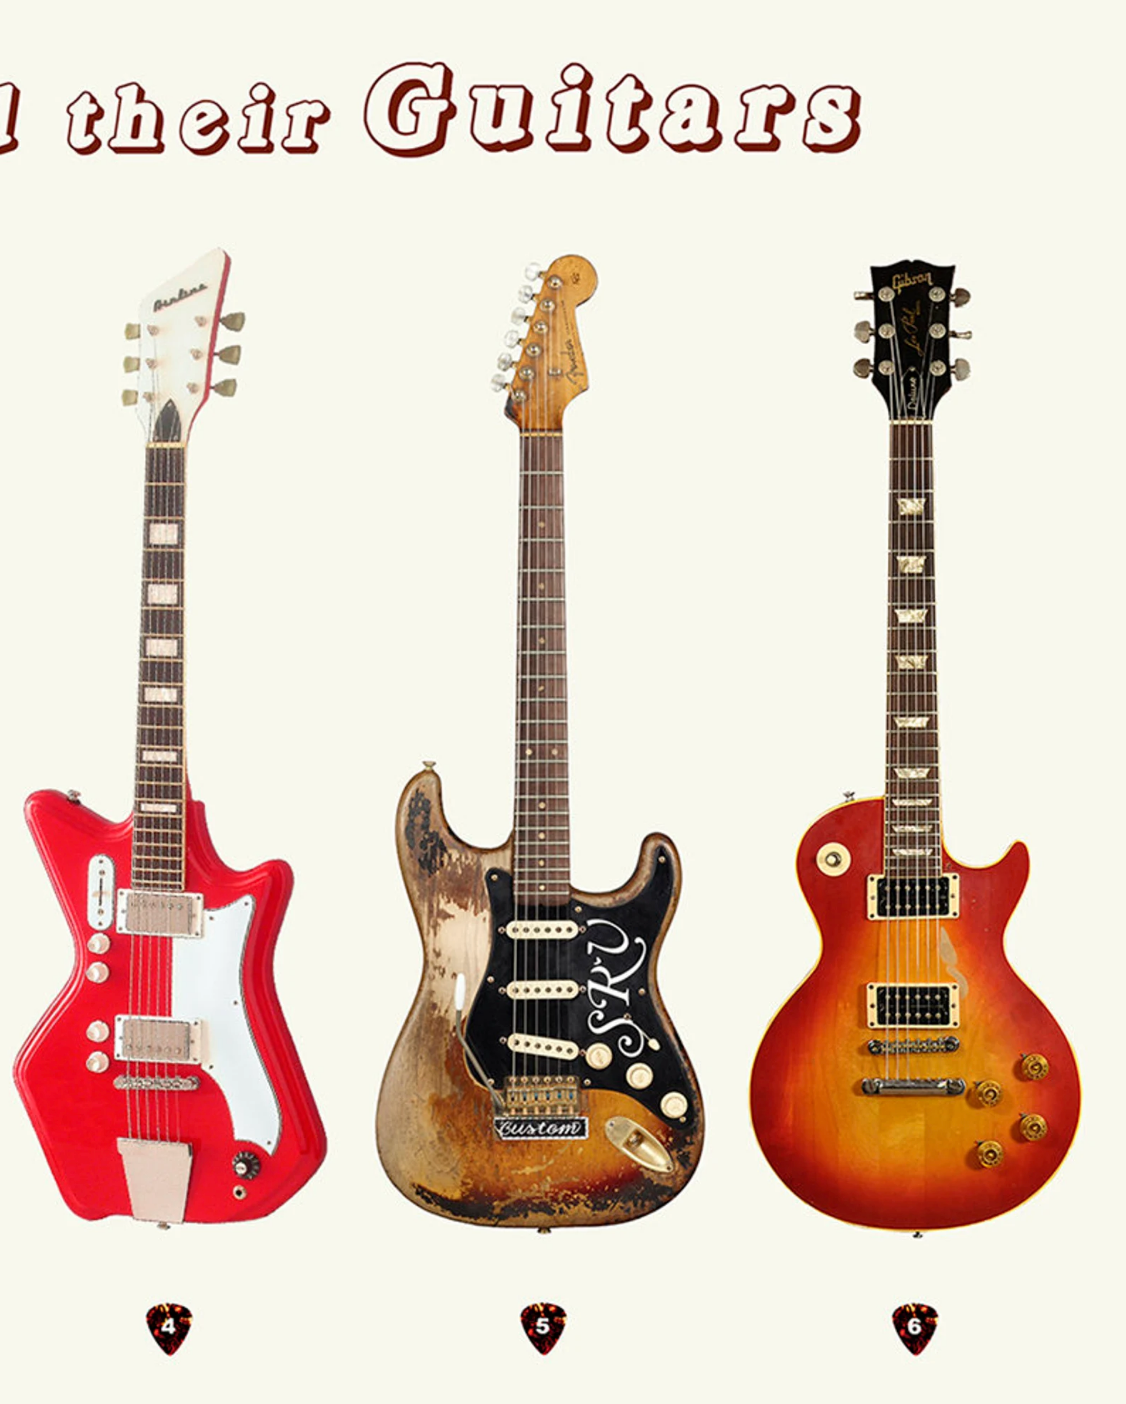 Guitar Poster, Rock Stars and their Guitars, Music Wall Art